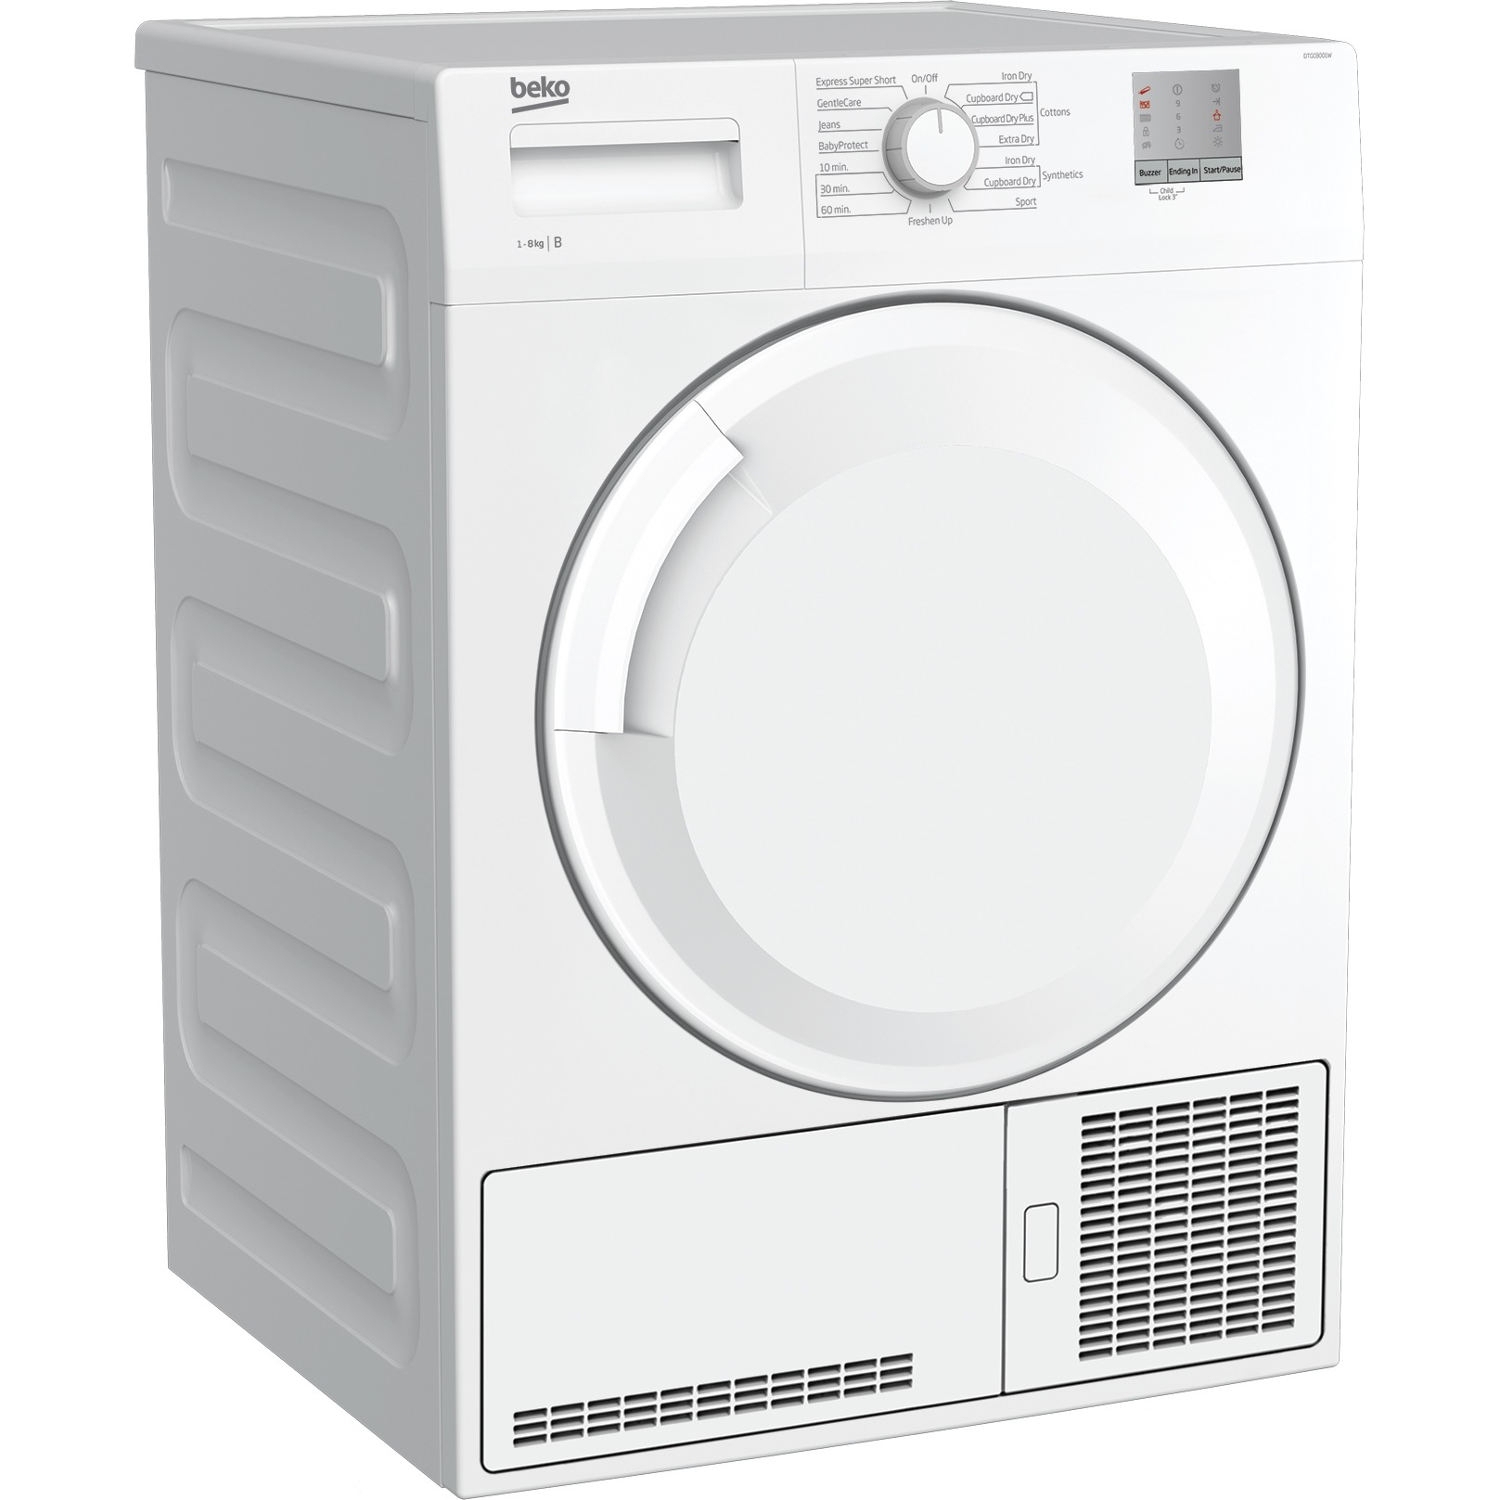 Beko 8kg Condenser Tumble Dryer - White - B Rated - 7